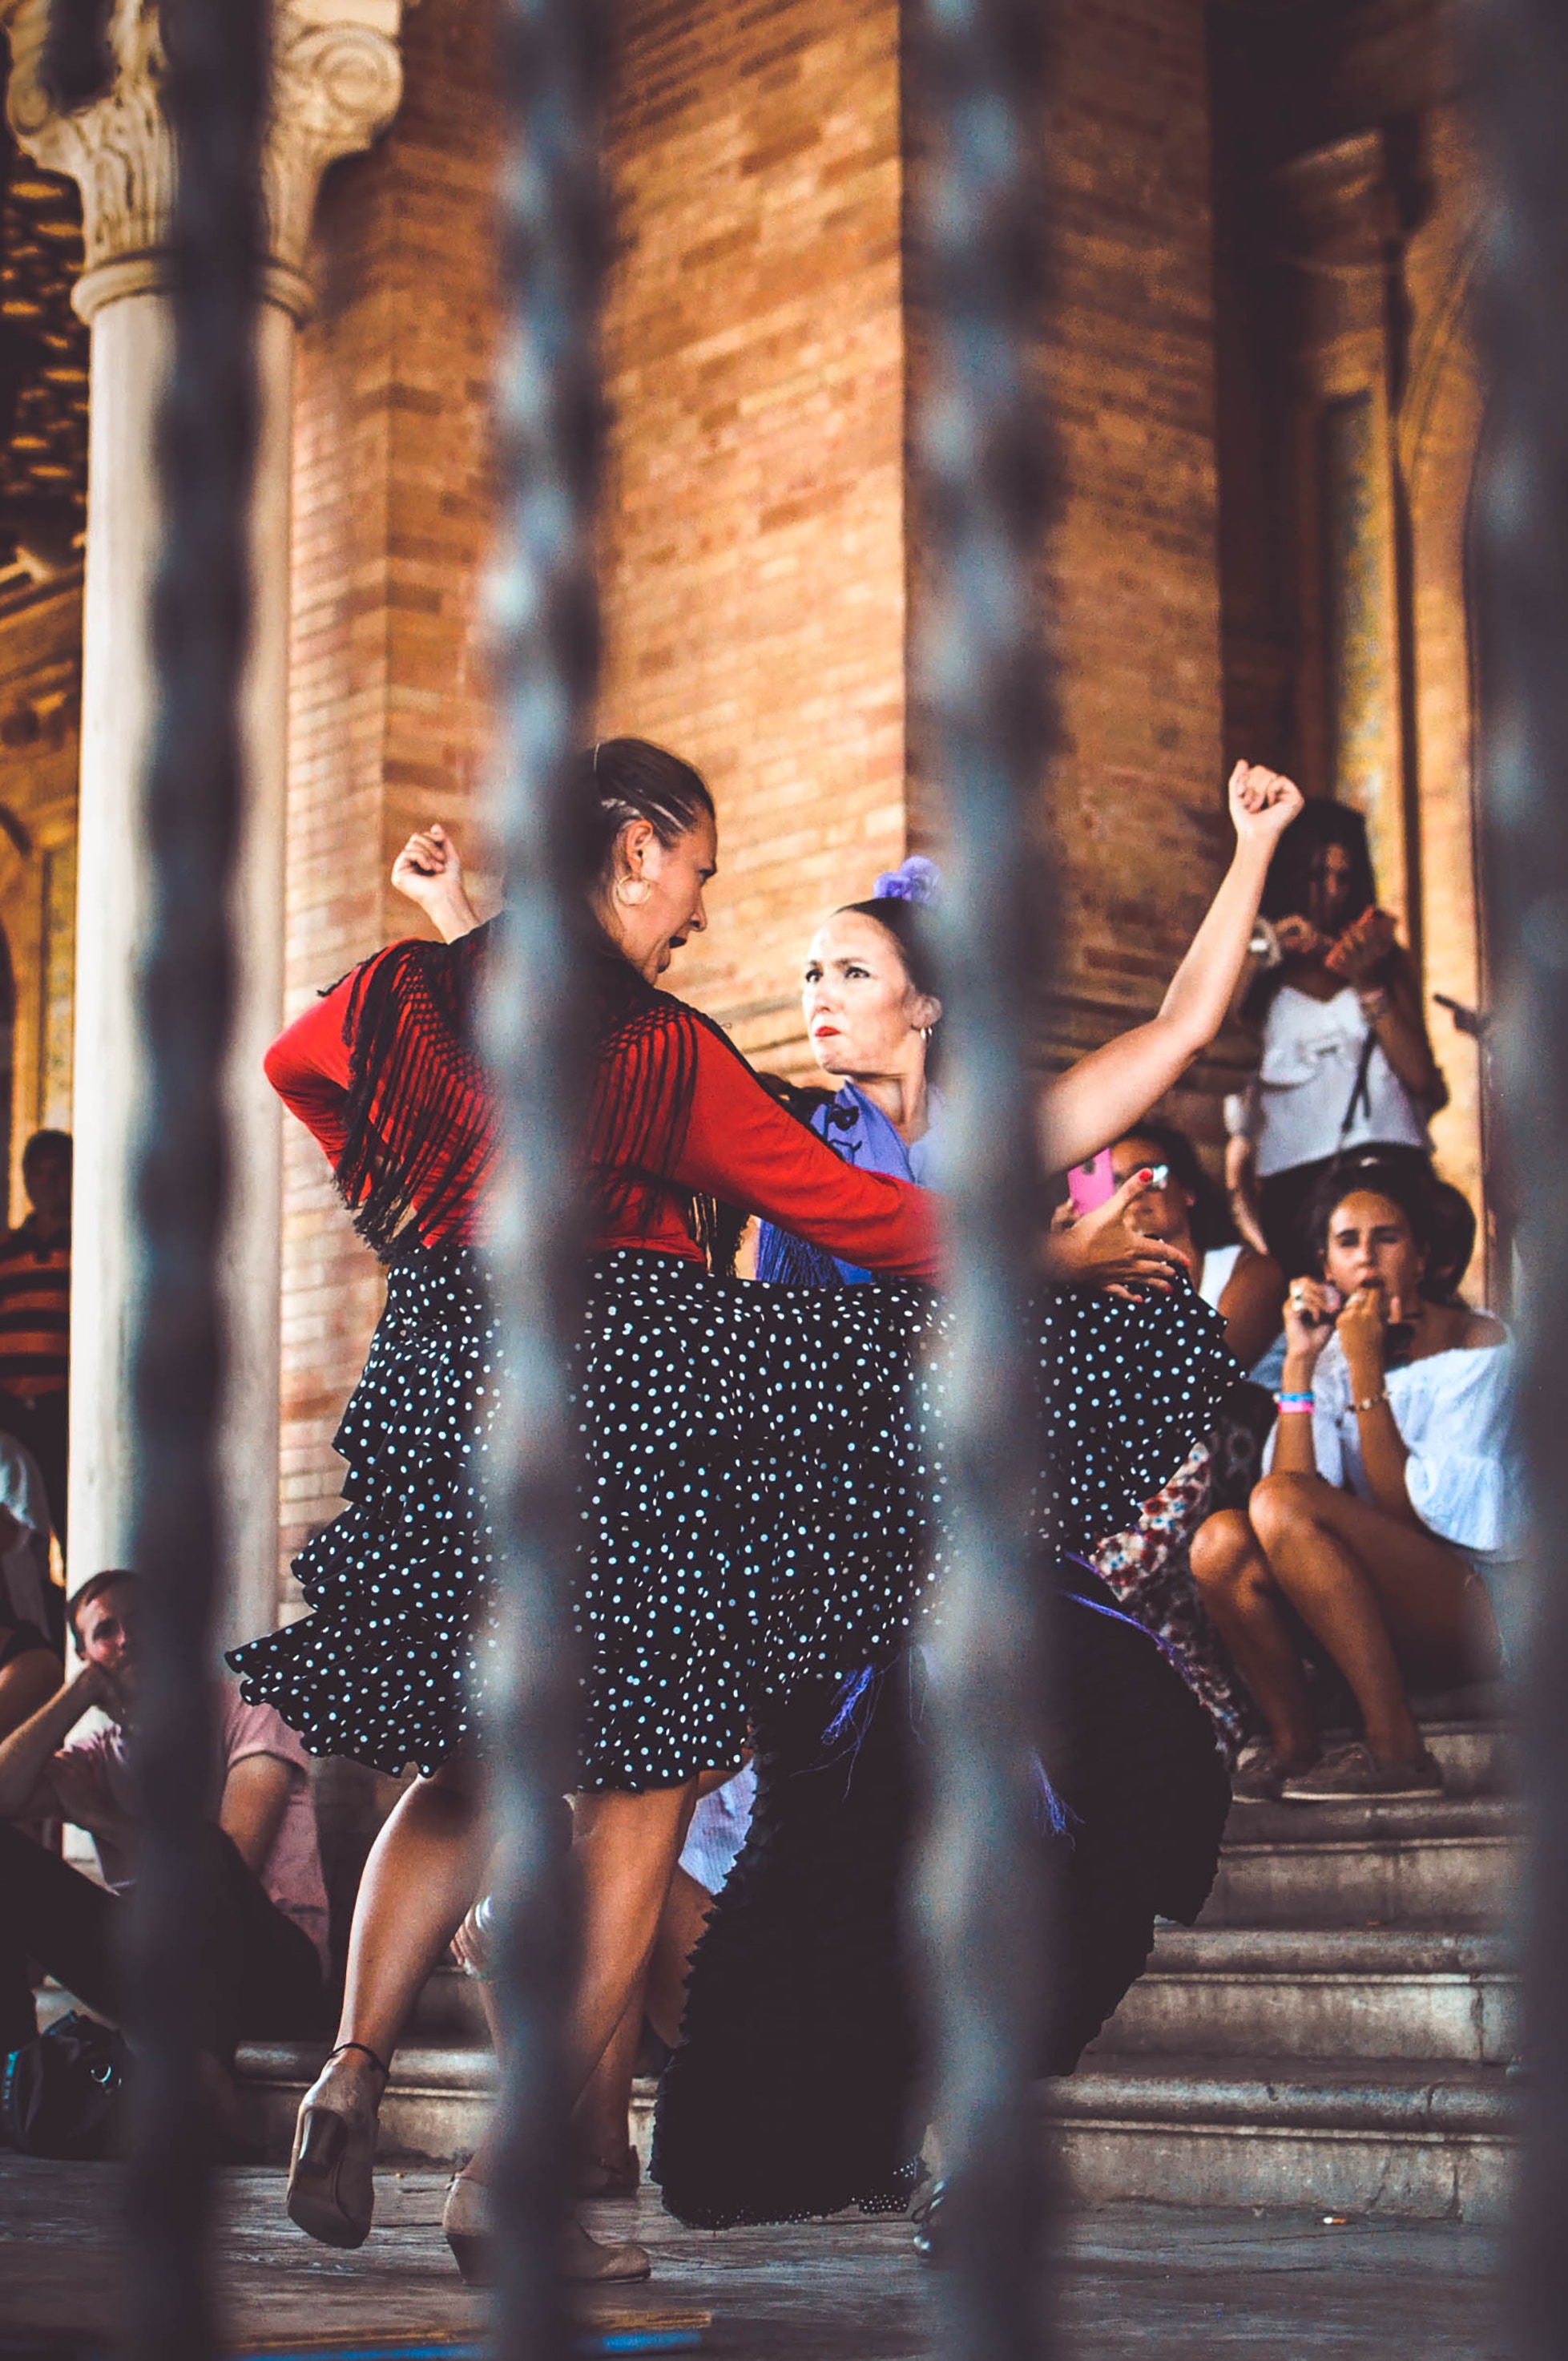 Flamenco Dancers, Seville, Spain, Photo by Stéphan Valentin on Unsplash